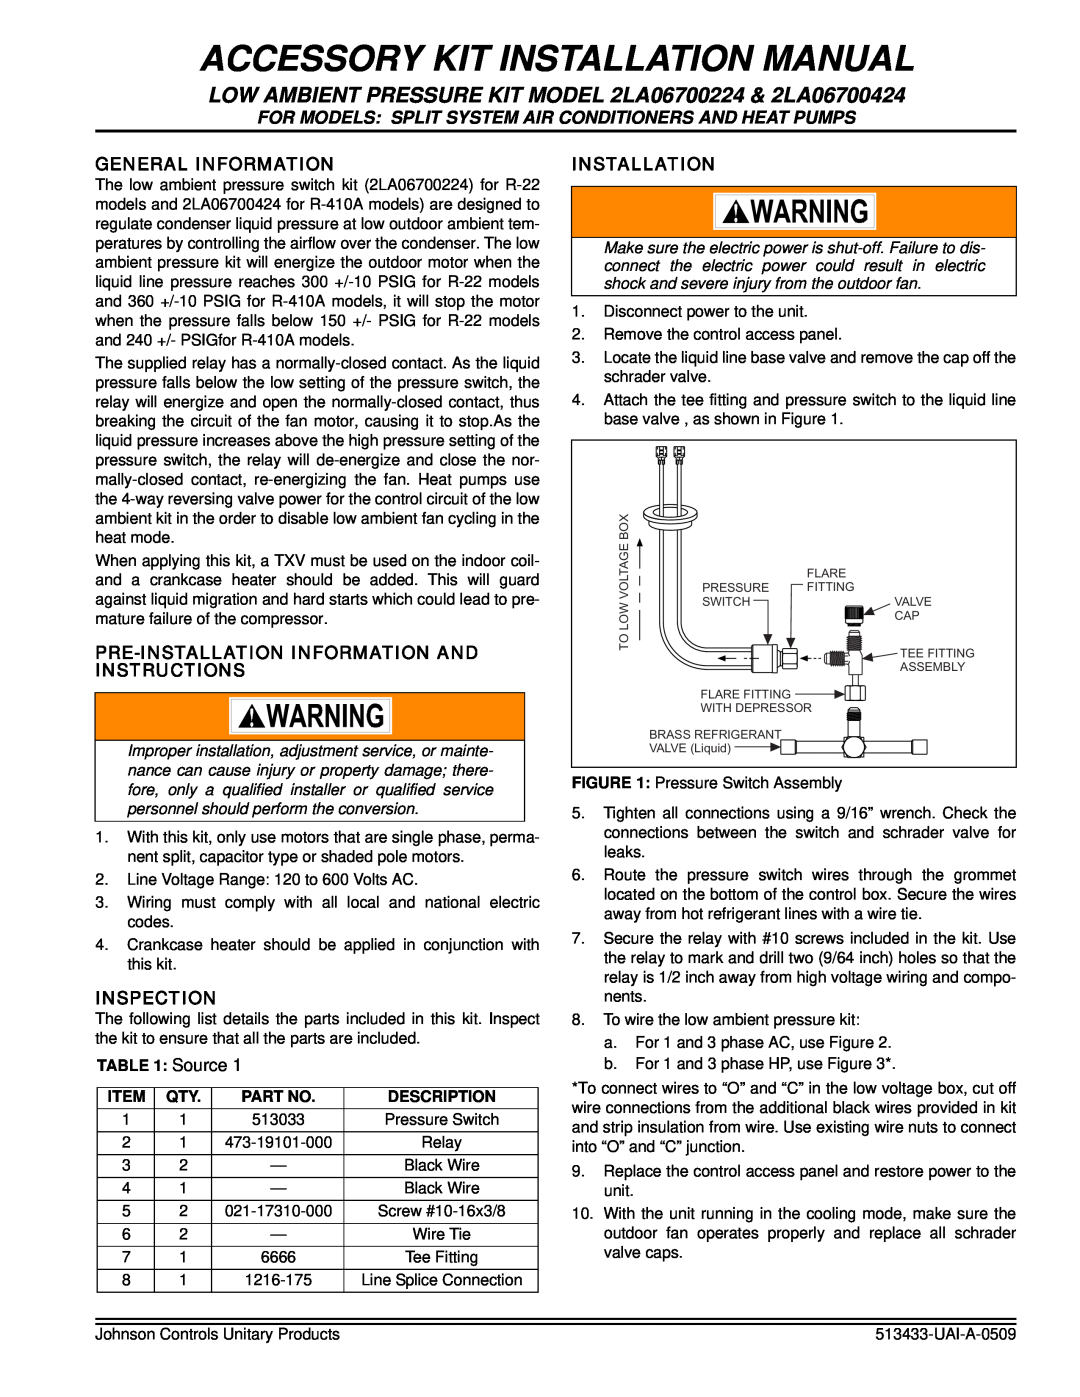 Johnson Controls Low Ambient Pressure Kit installation manual Source, Description, Accessory Kit Installation Manual 